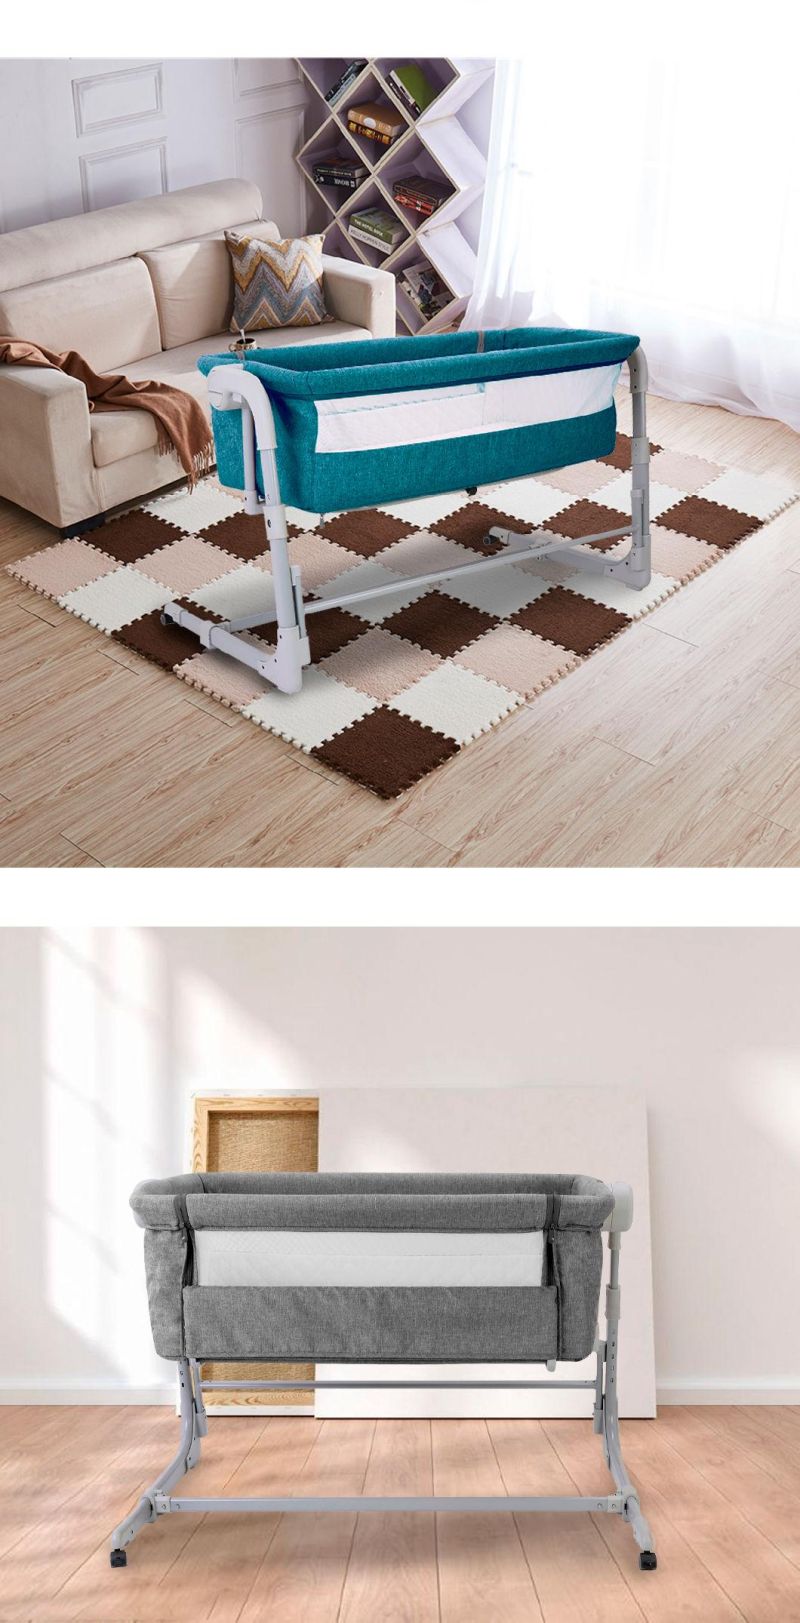 New High Standard China Supplier Cribs Kids Furniture Portable Folding Baby Crib